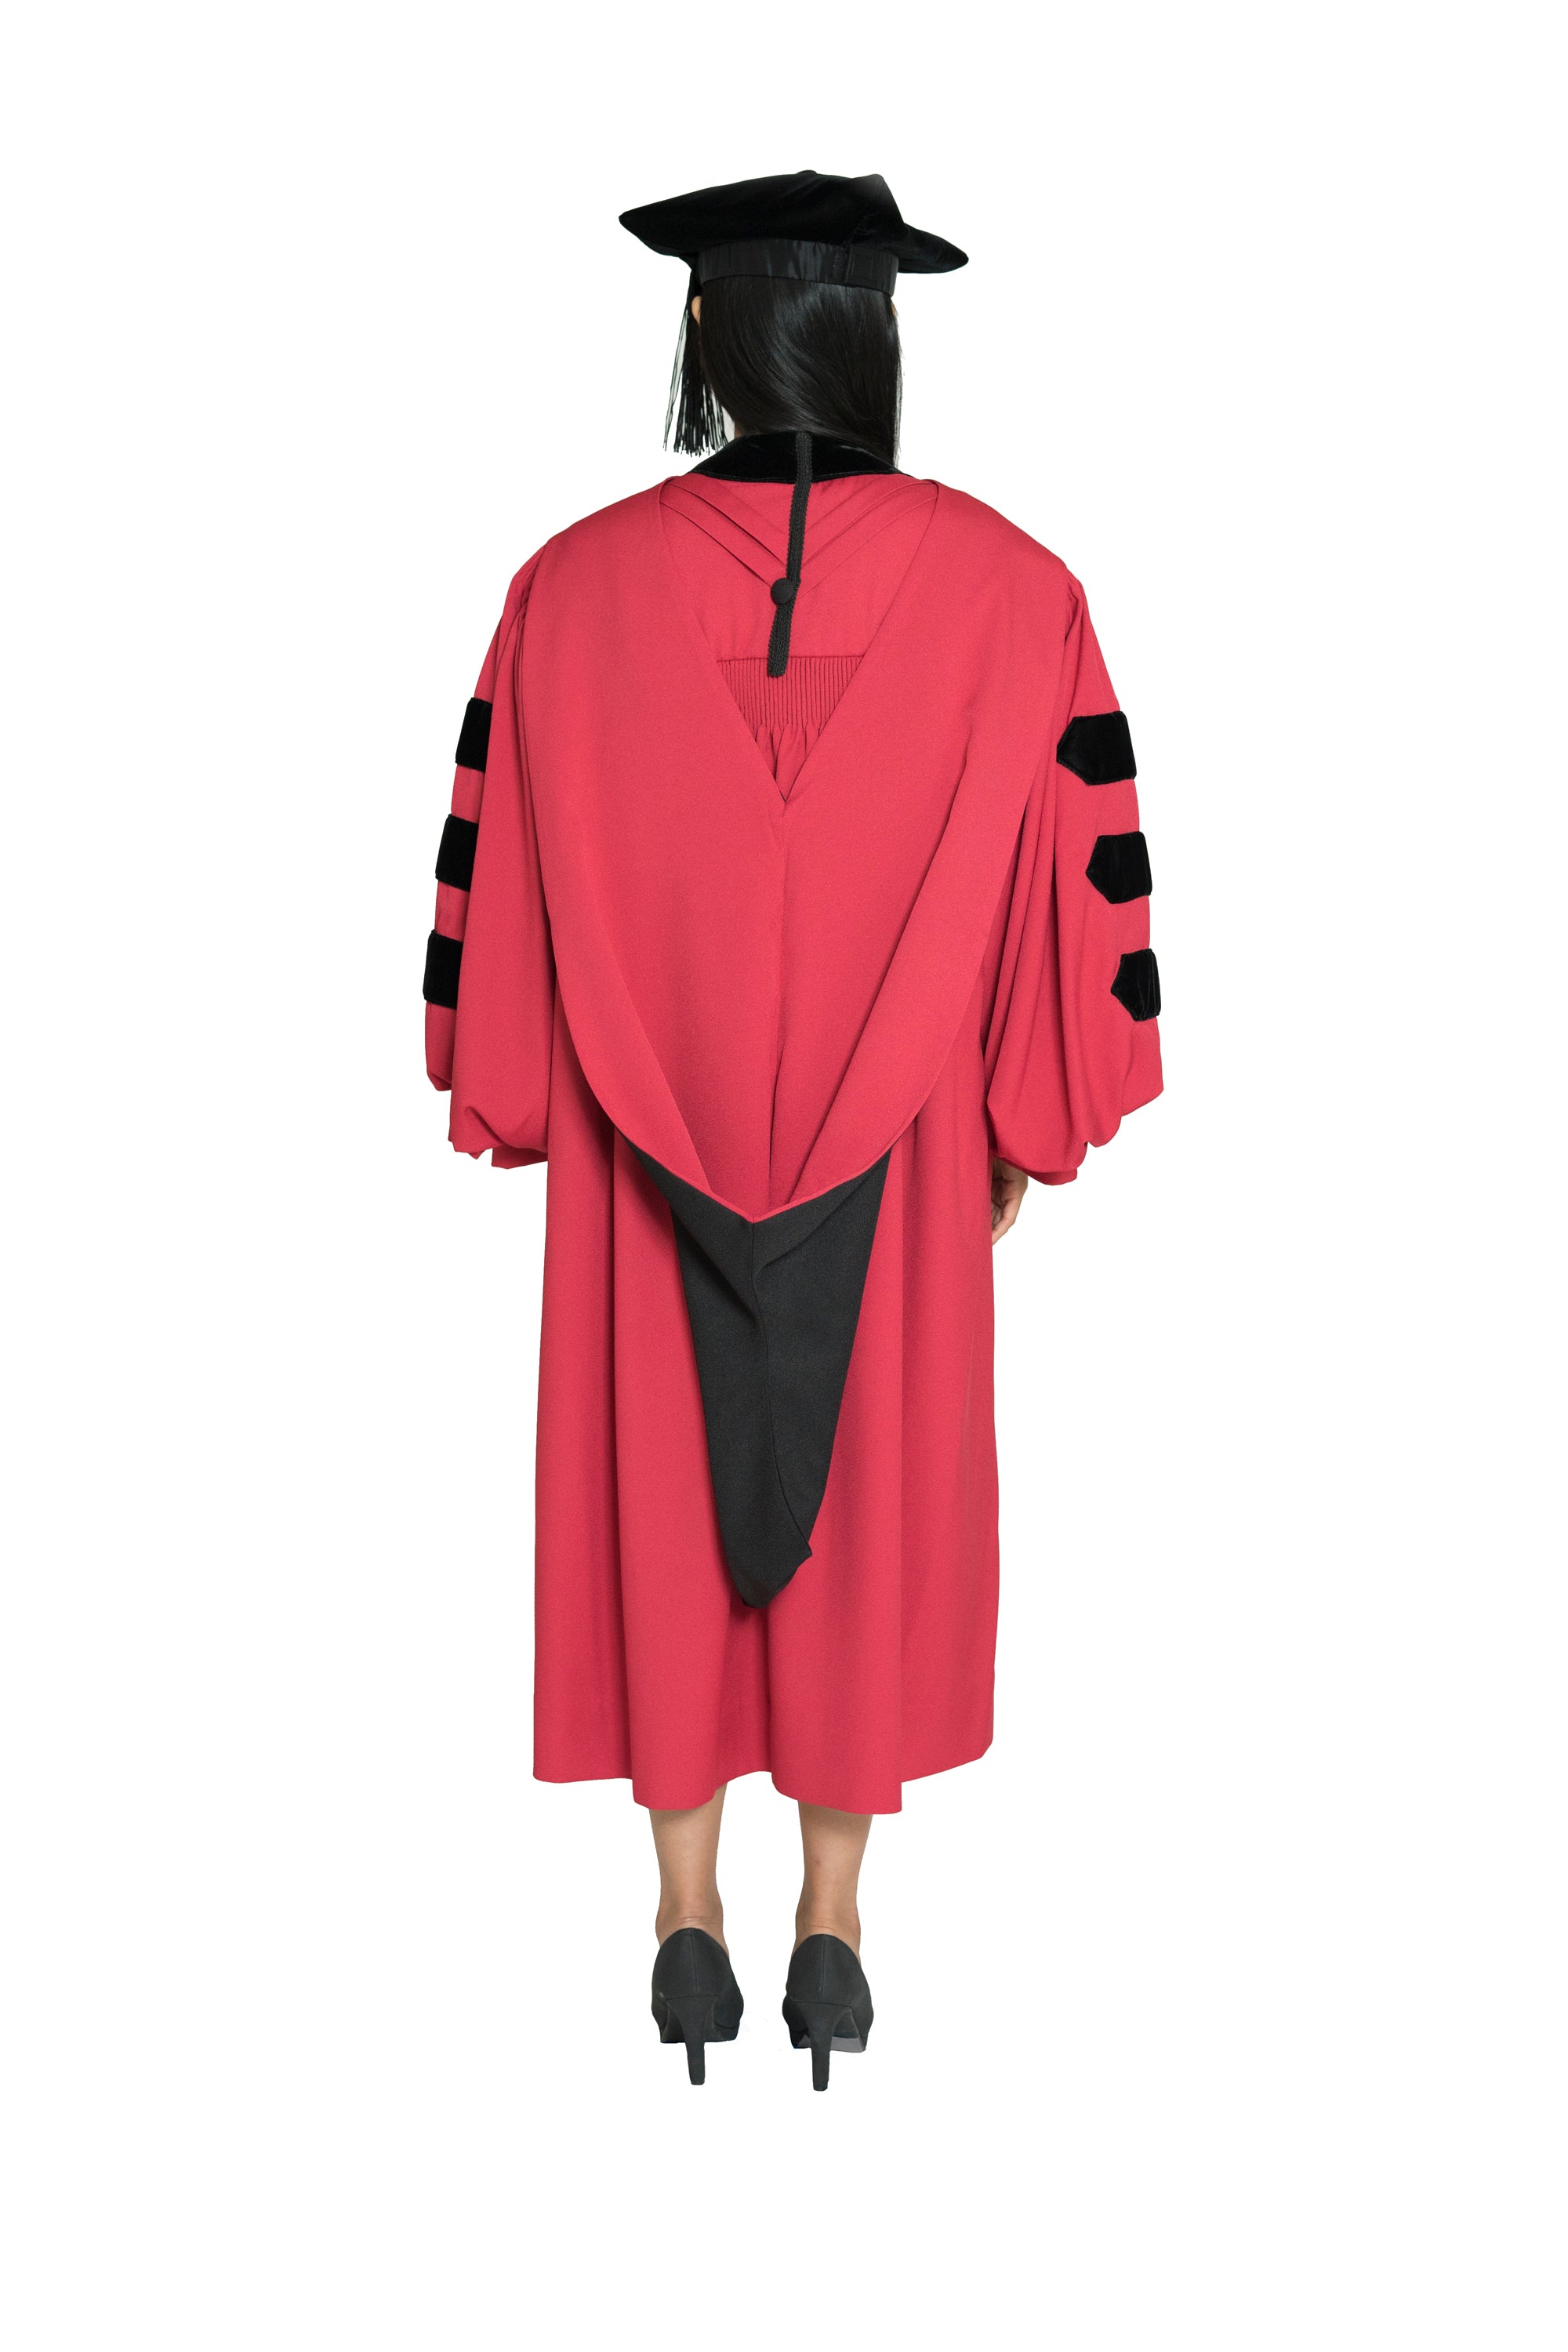 Harvard University Doctoral Regalia, PhD Gown, Doctoral Hood, and 4-sided Velvet Cap / Tam